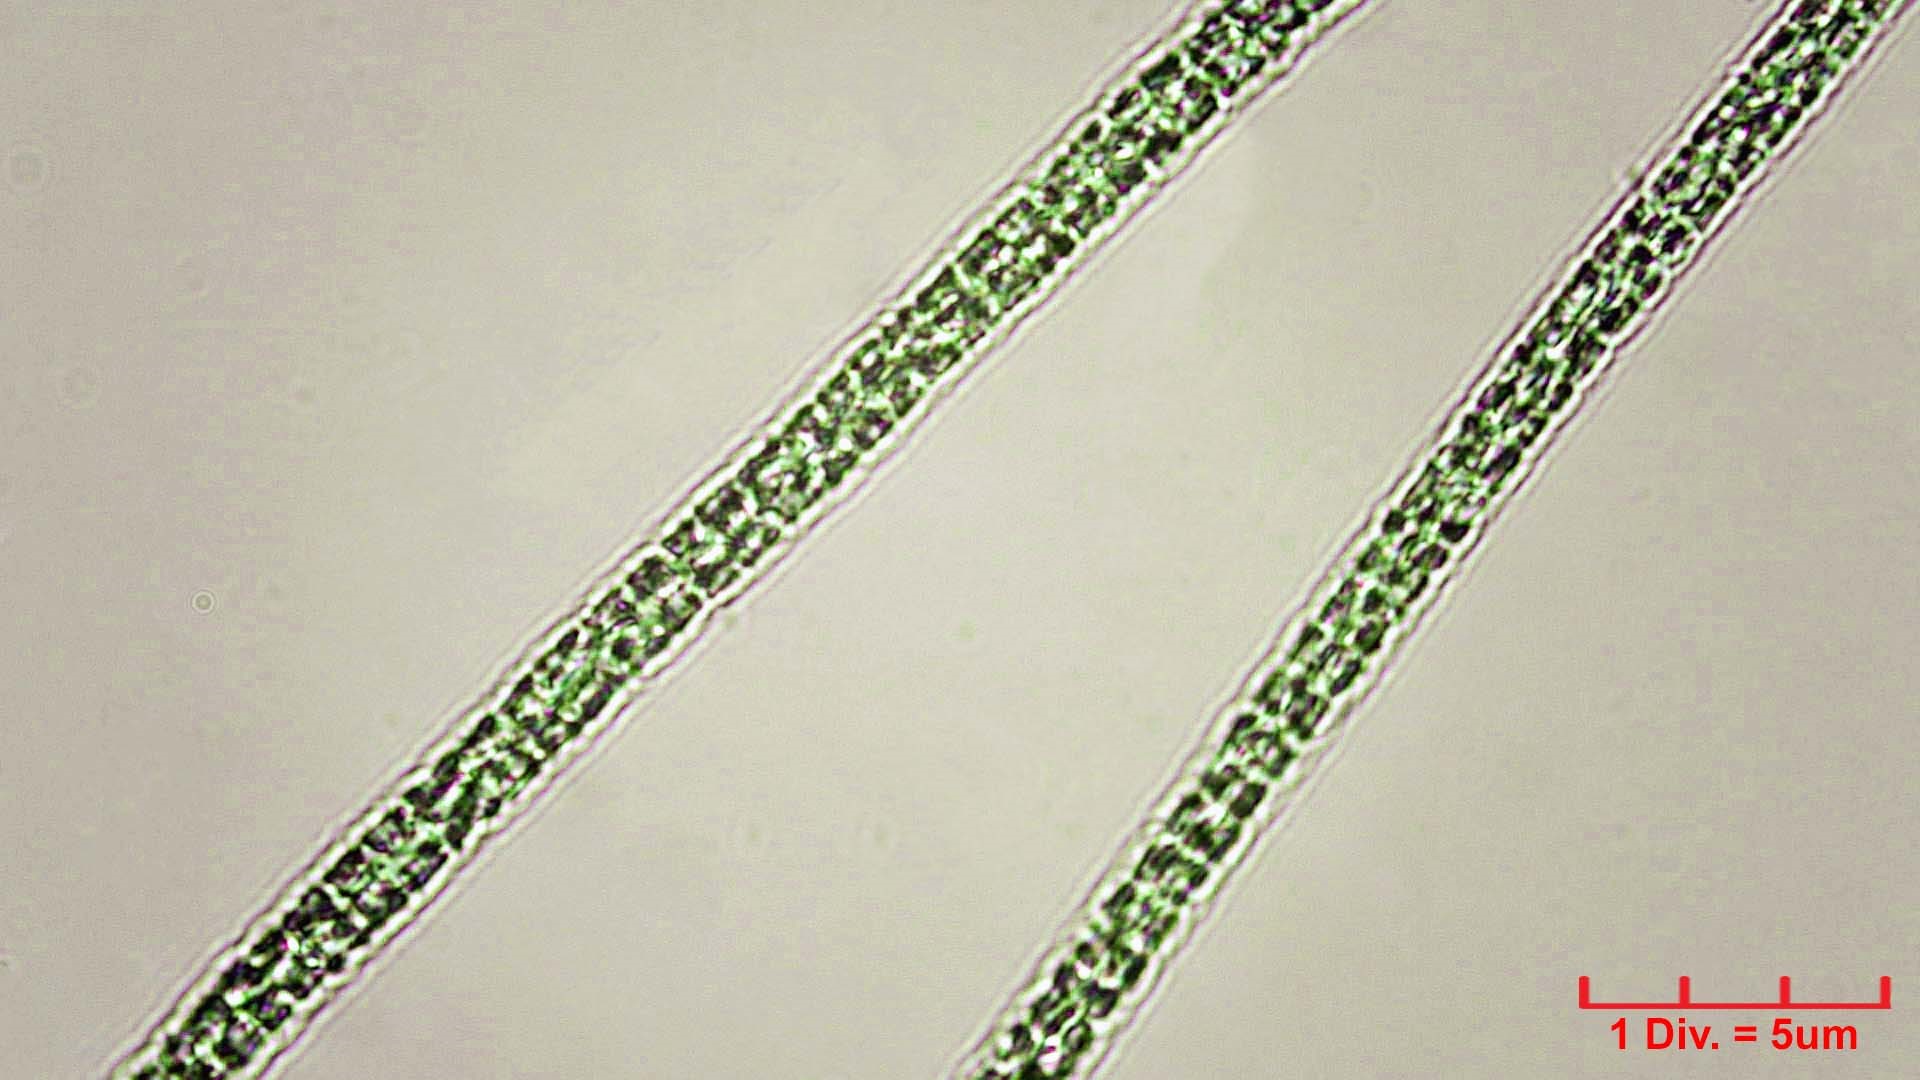 Cyanobacteria/Oscillatoriales/Microcoleaceae/Planktothrix/agardhii/planktothrix-agardhii-248.jpg